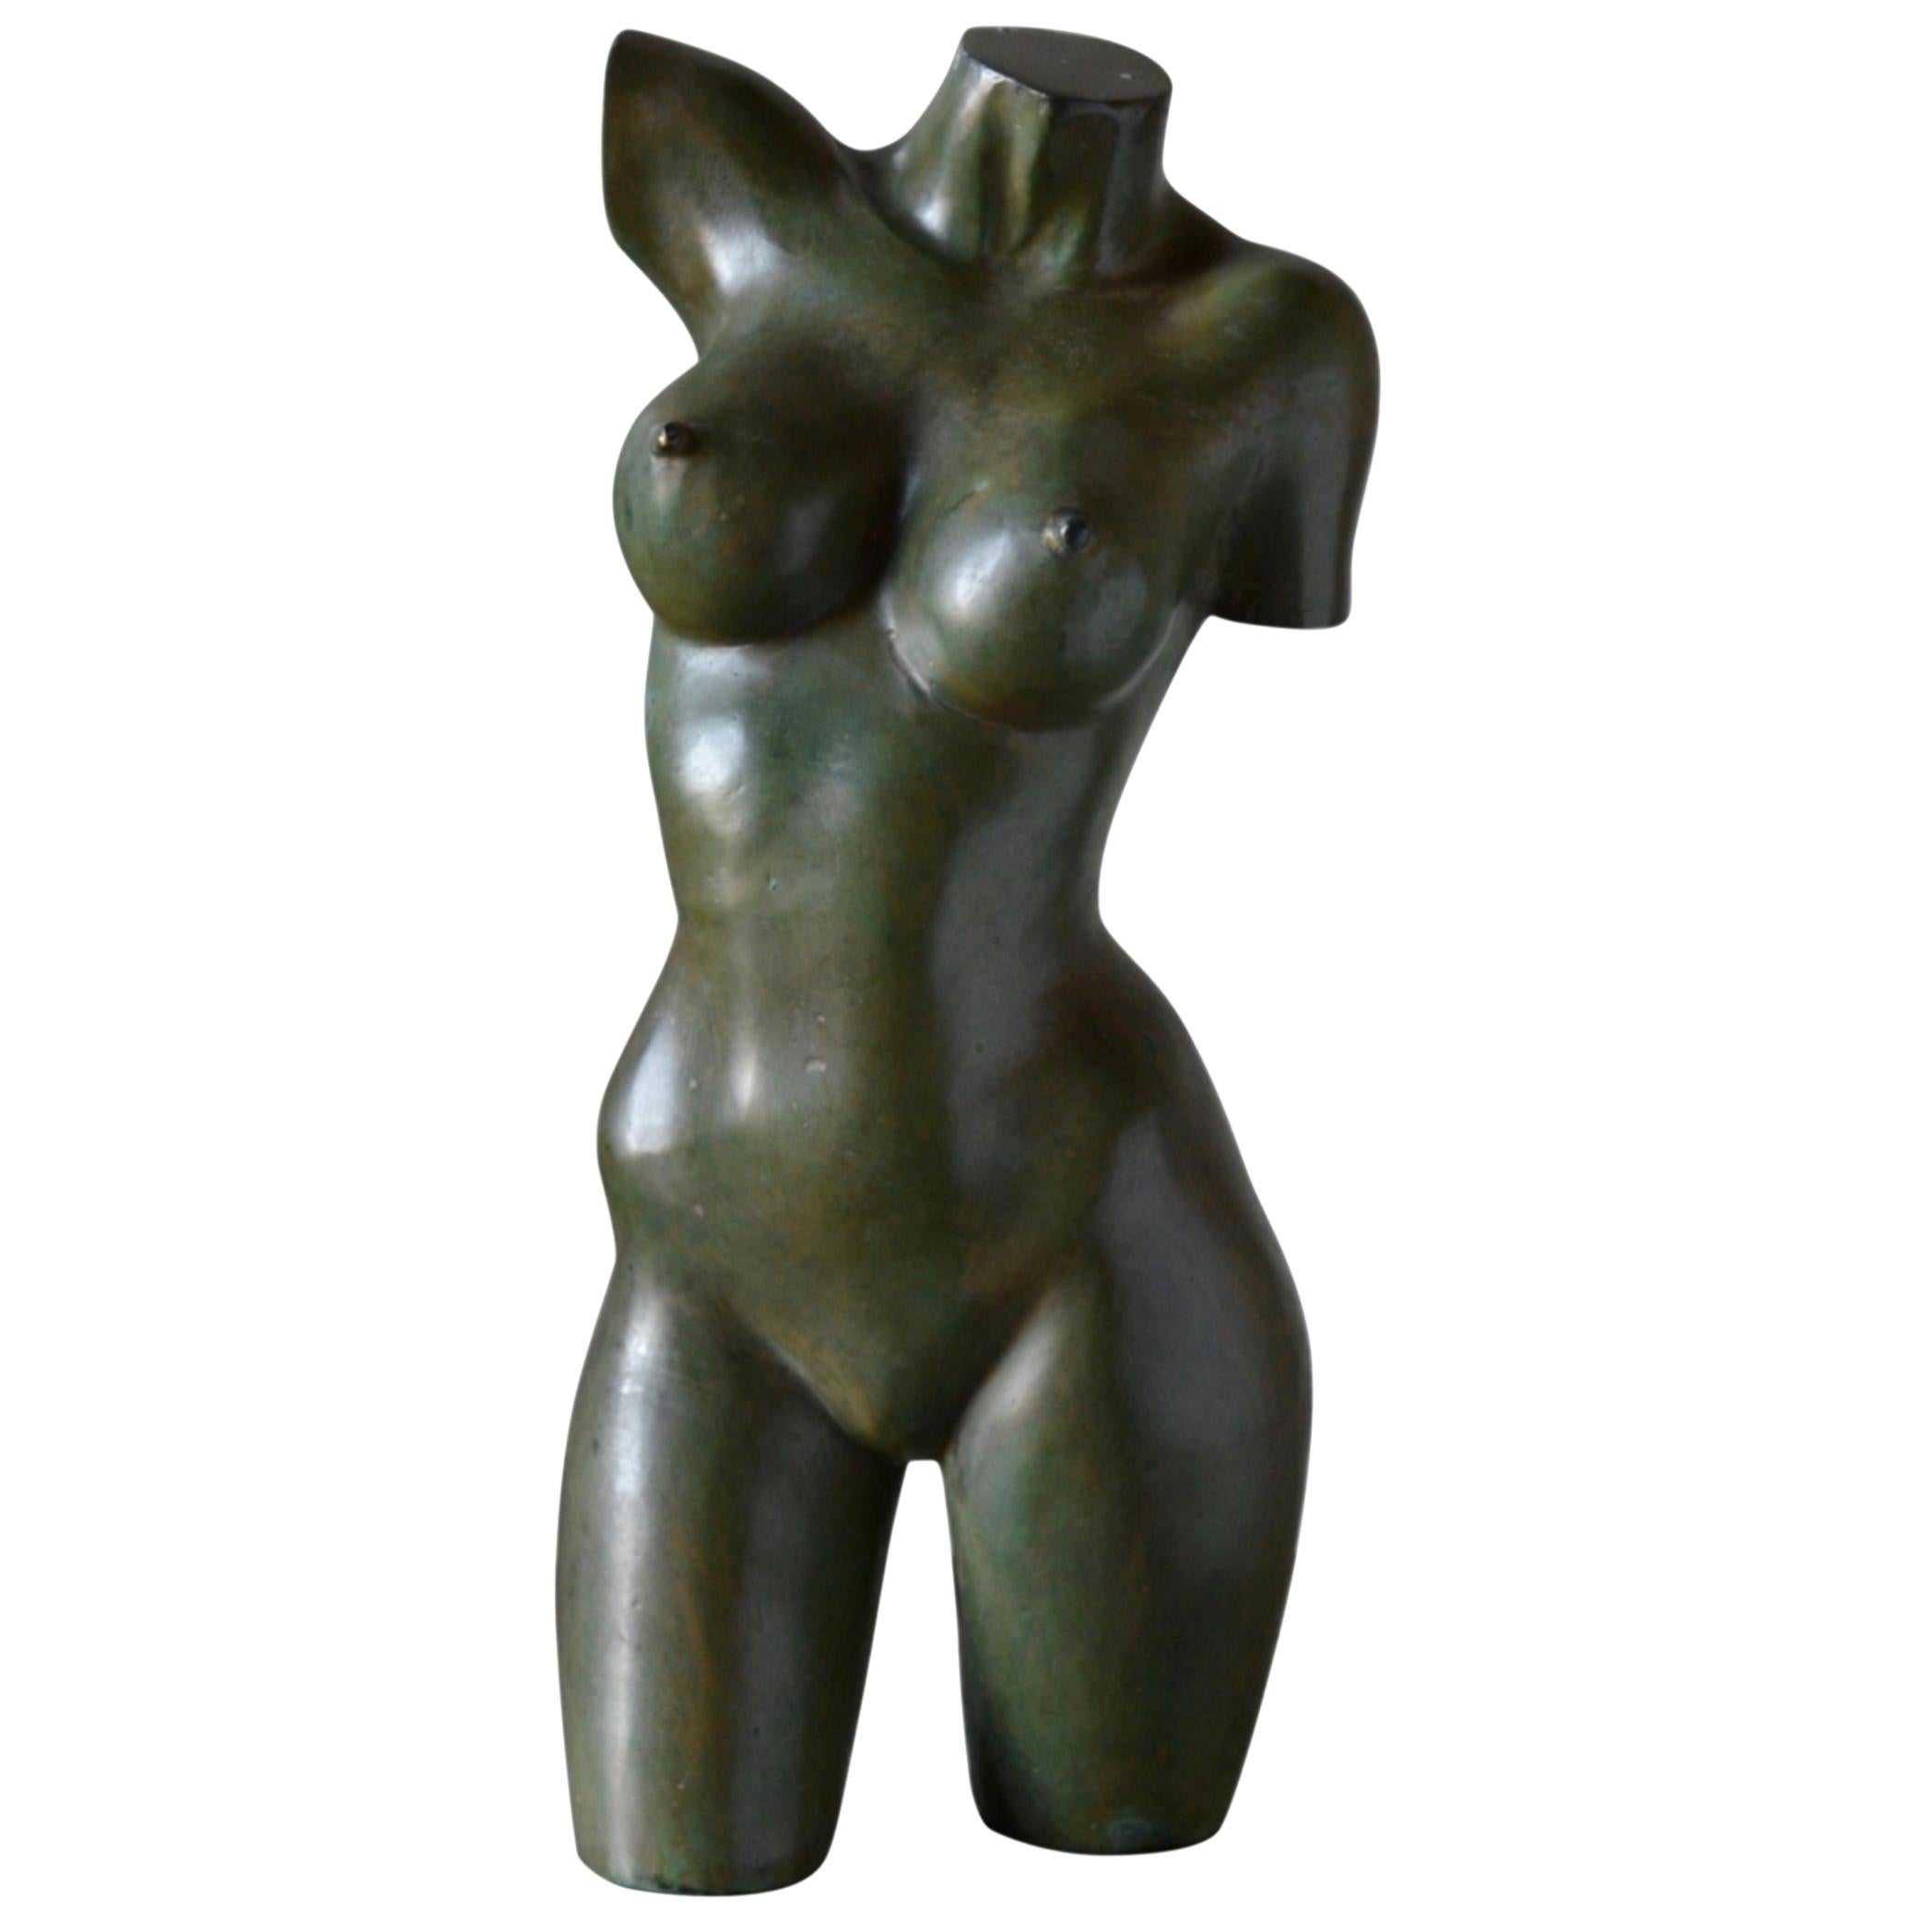 Female Torso "Garbo" Sculpture in Solid Bronze by Rr Sweden